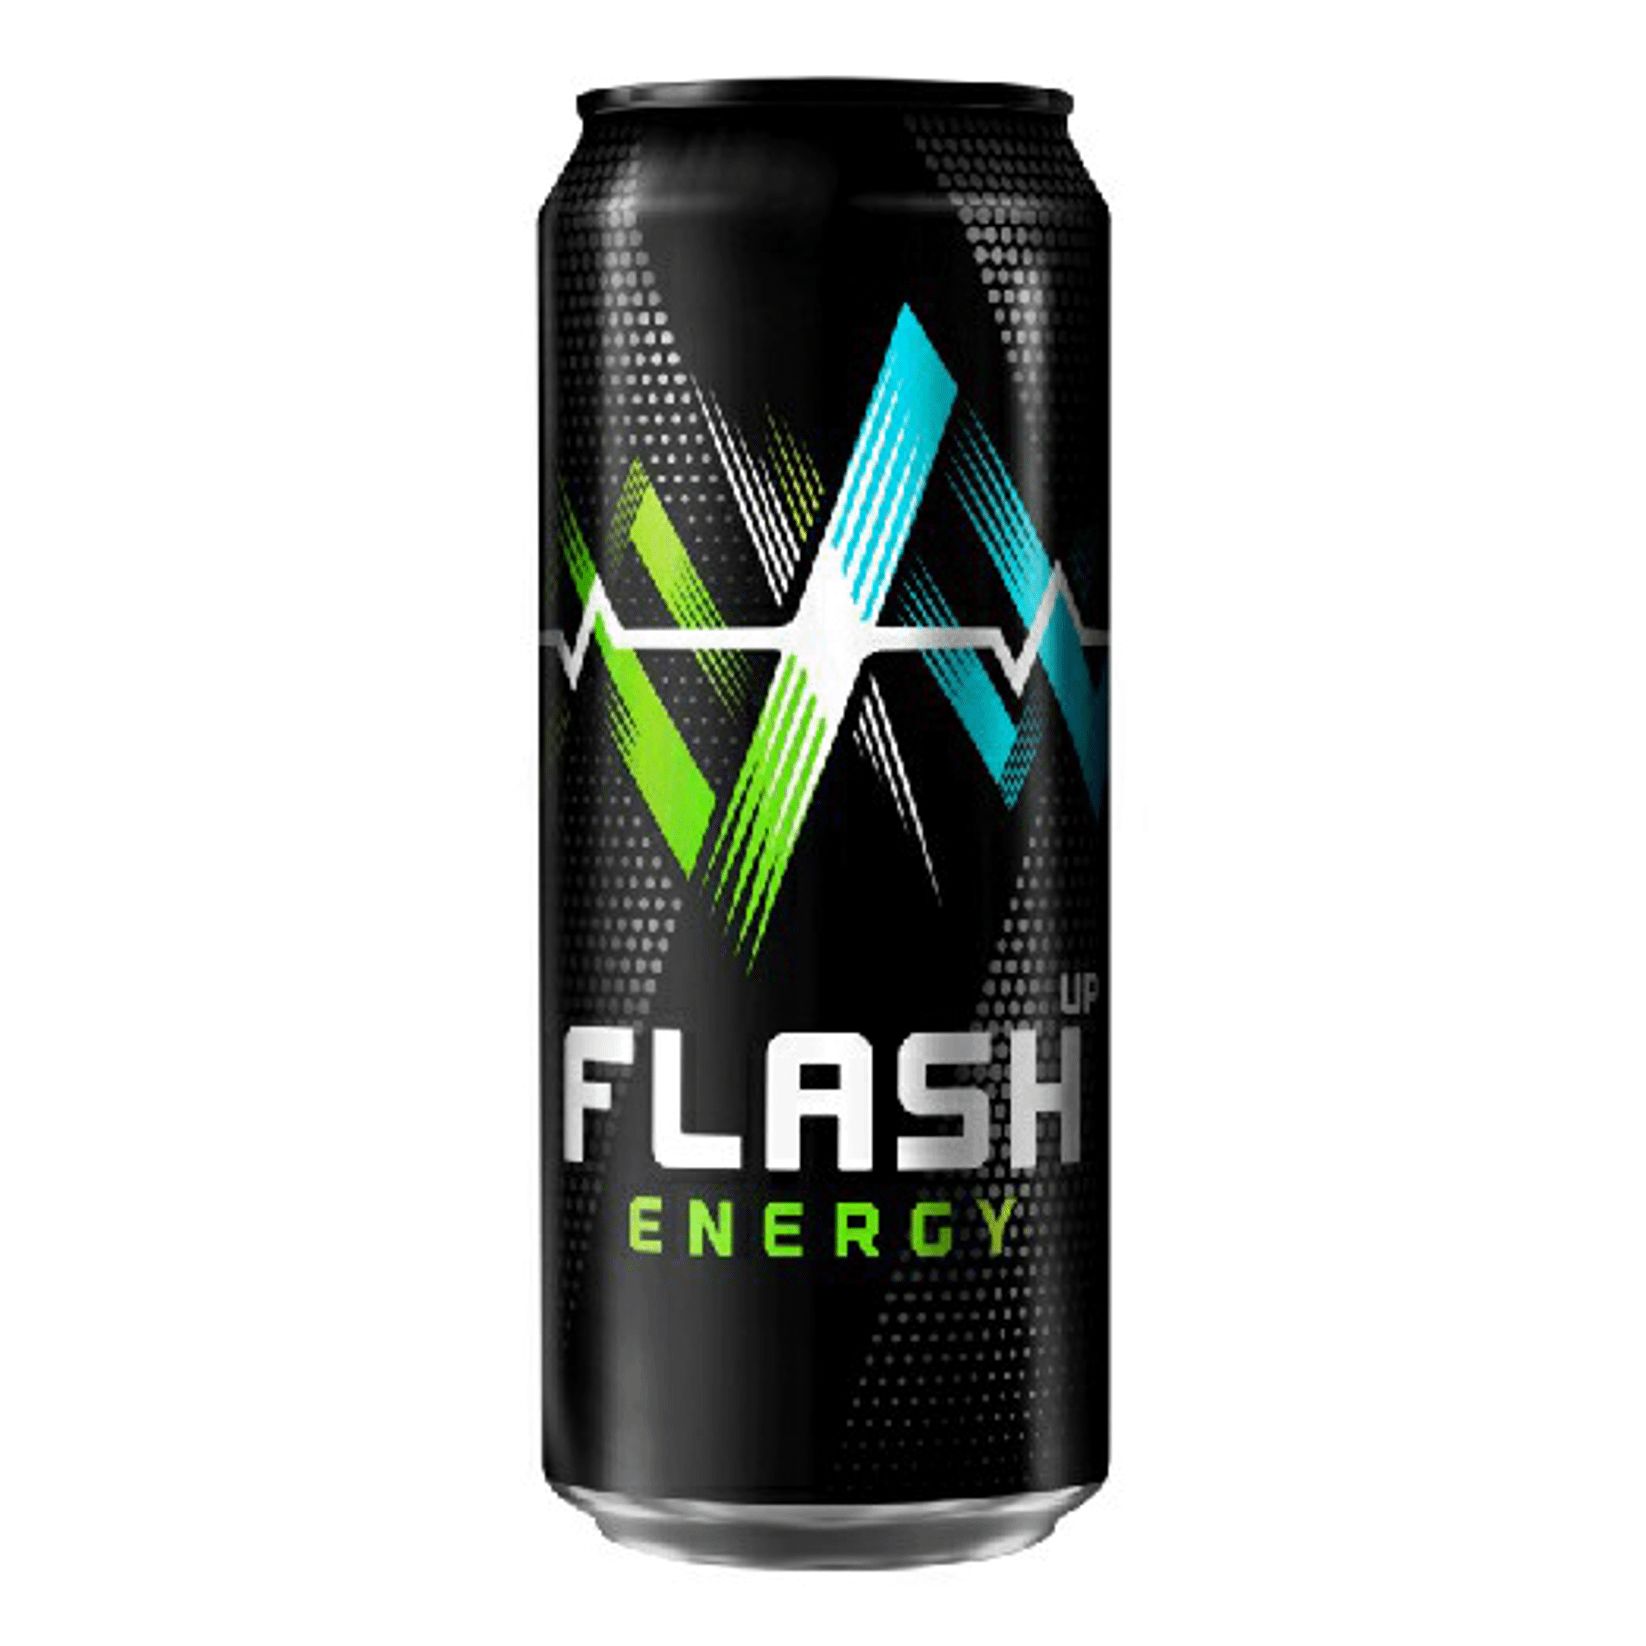 Flash mix. Flash up Energy ультра 0,45л ж/б *24. Энергетический напиток Flash up Energy Ultra ж/б. 0,45л. Энергетический напиток флэш ап 0,45 л. Энергетик флеш ап Энерджи.